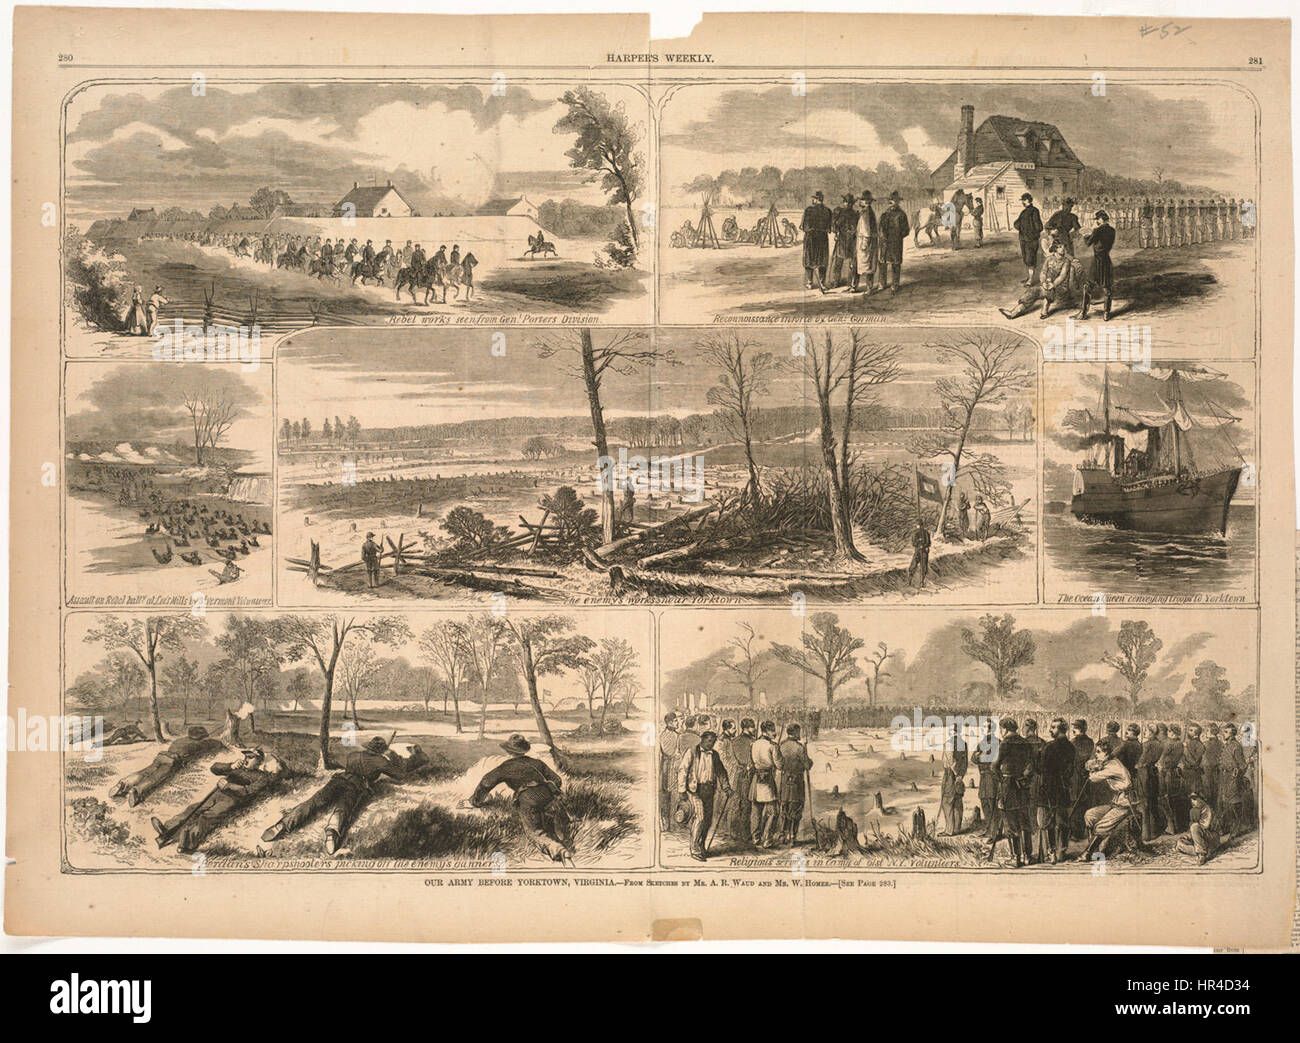 Our army before Yorktown, Virginia (Boston Public Library) Stock Photo